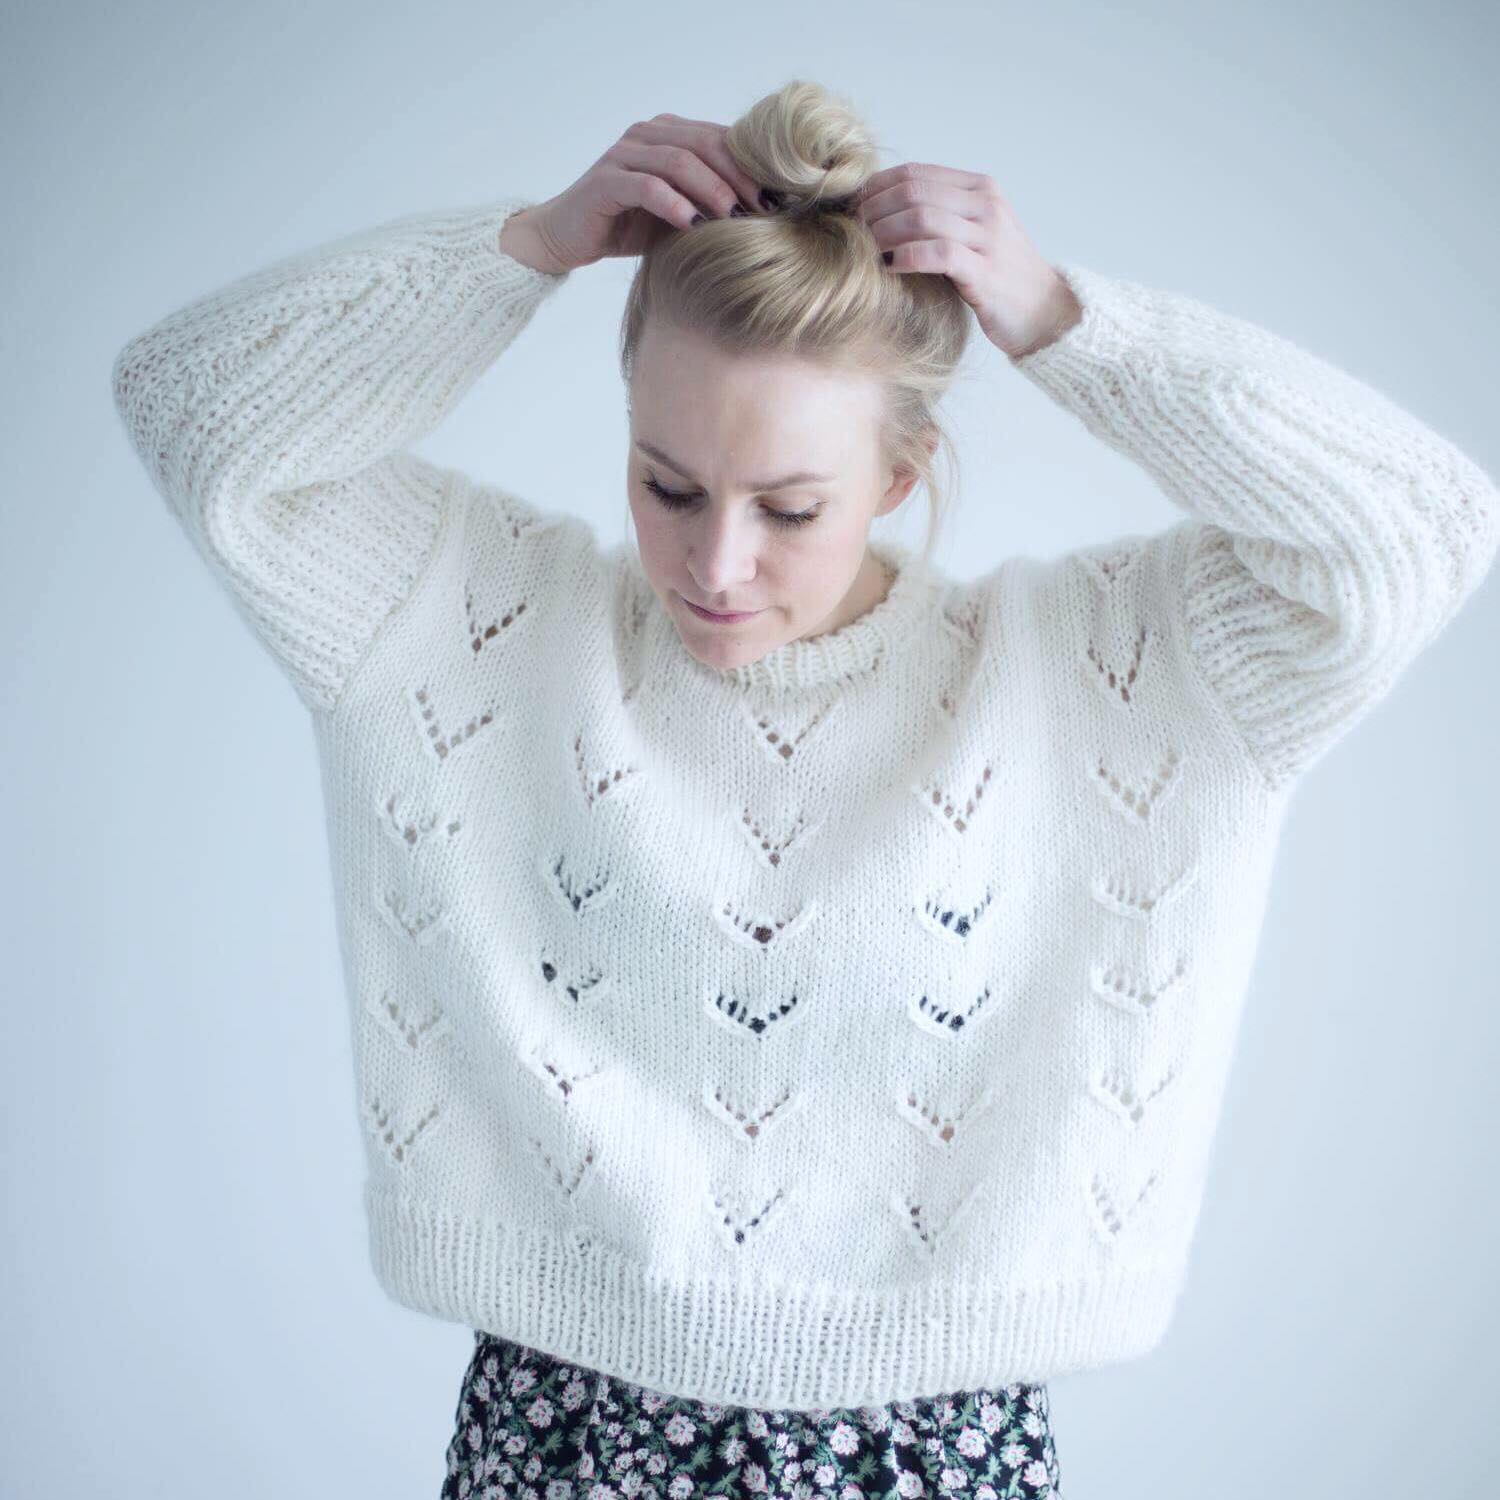  - Bloom Sweater Knitting Pattern | Eyelet pattern | Womens knitted sweater - 07/04/2018